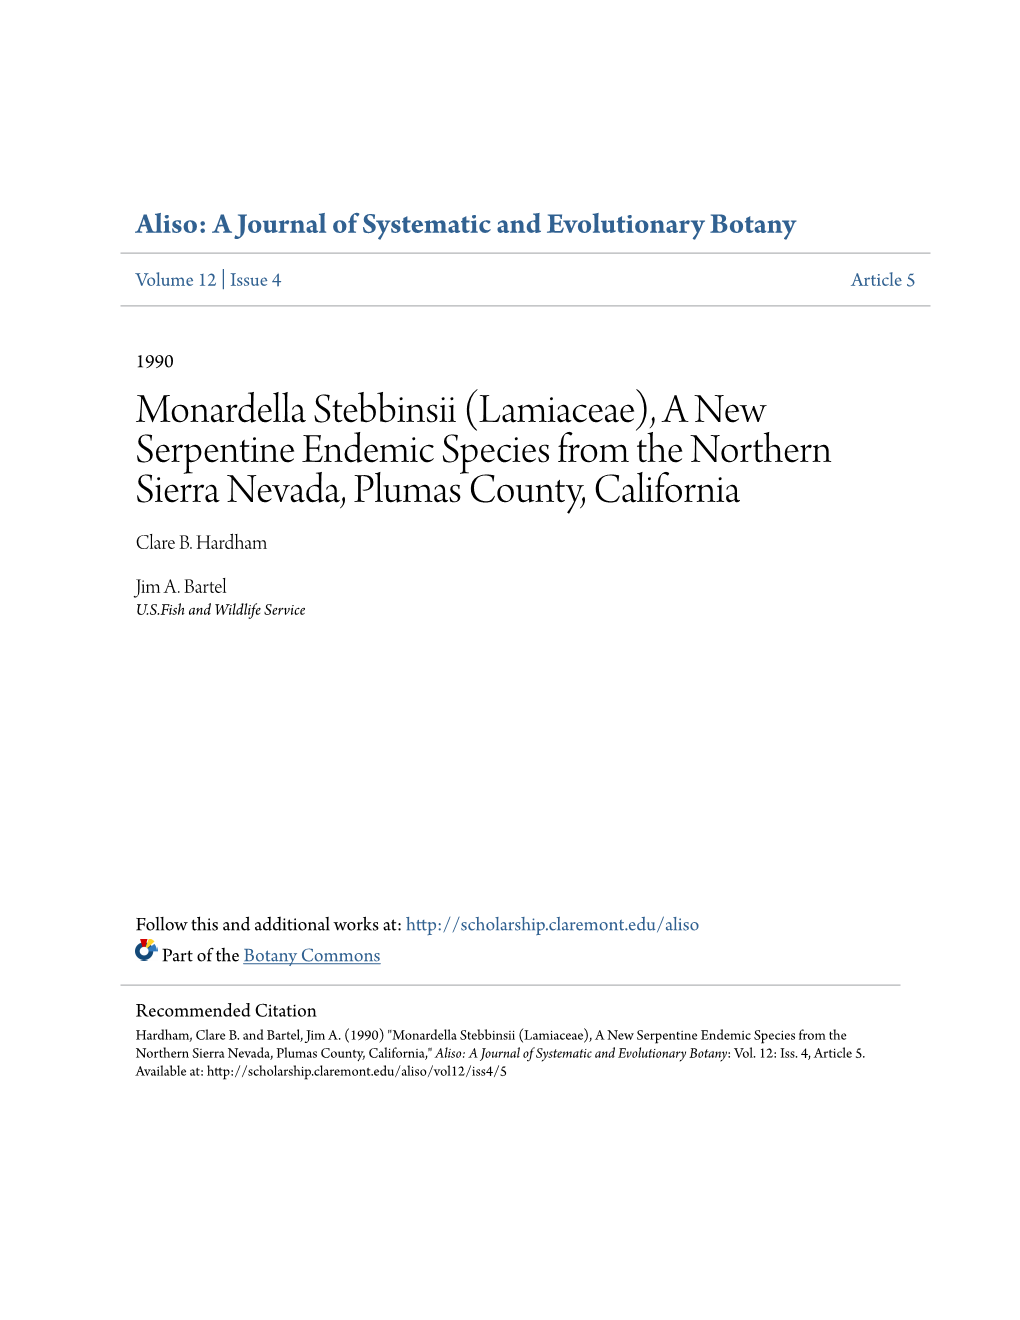 Monardella Stebbinsii (Lamiaceae), a New Serpentine Endemic Species from the Northern Sierra Nevada, Plumas County, California Clare B